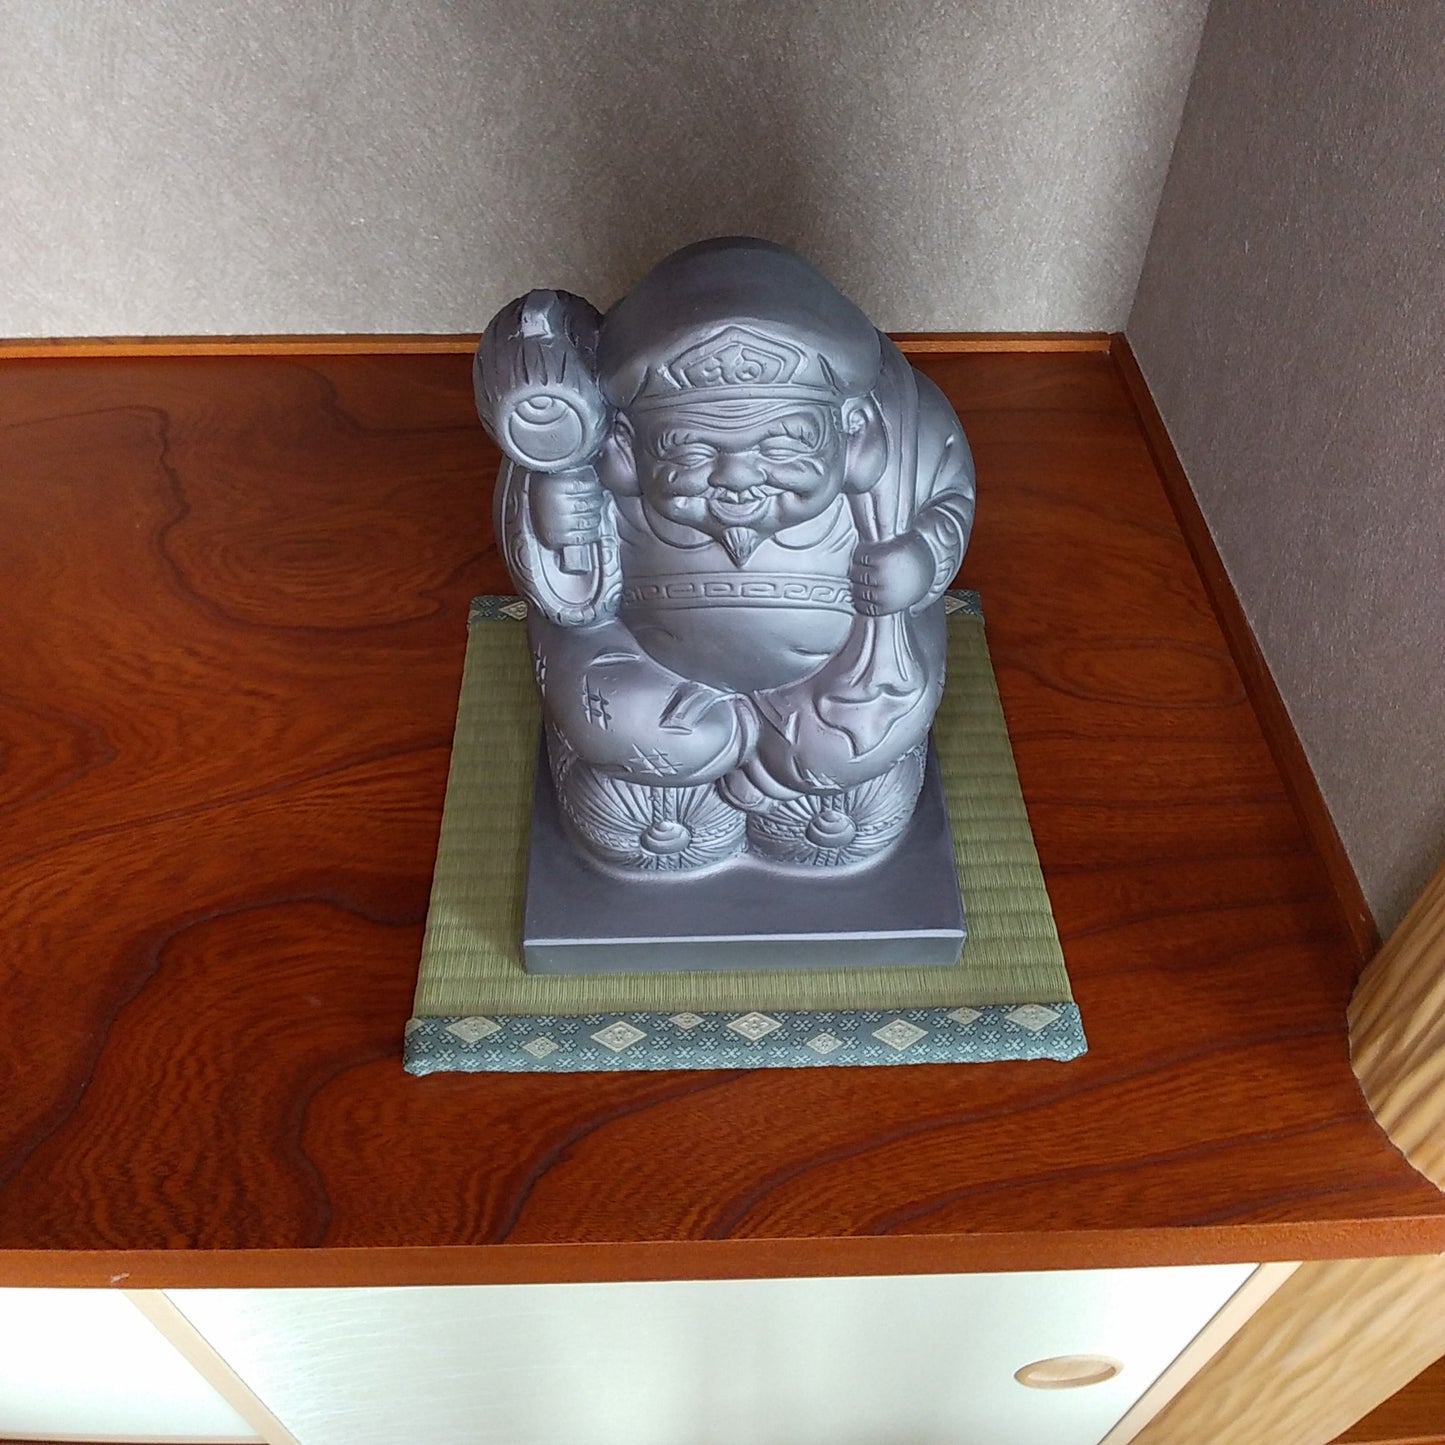 Japanese lucky god figure(Daikokuten) -Made of the ceramic-